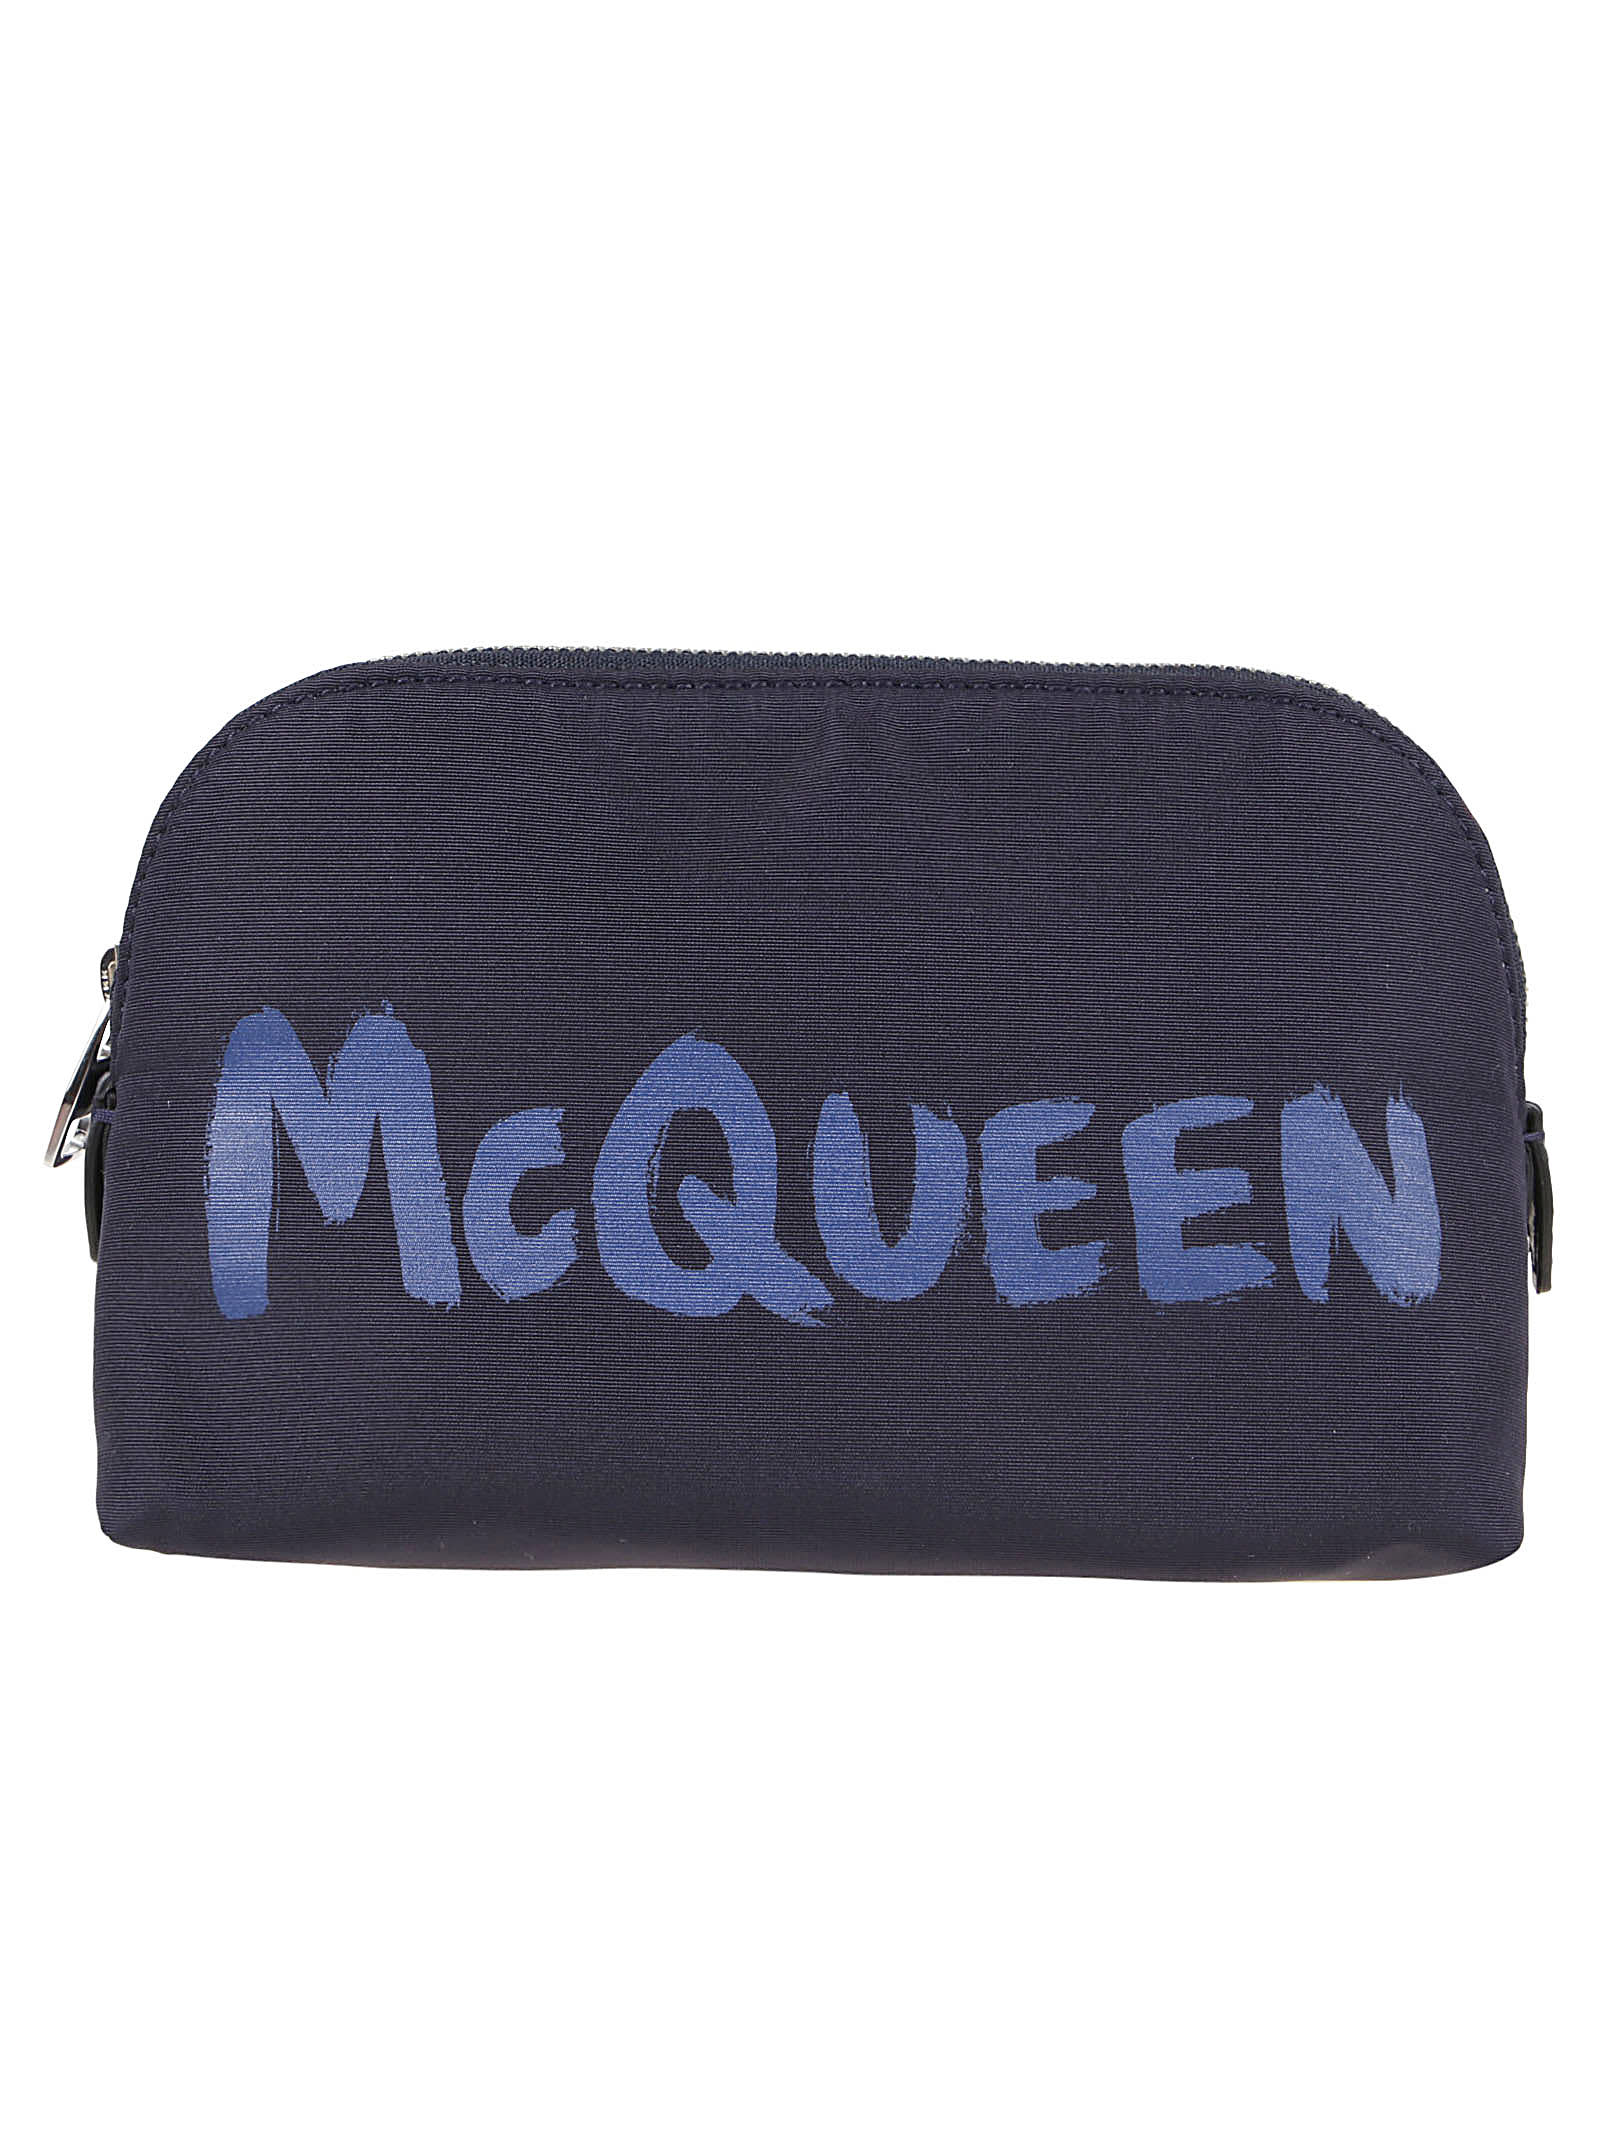 Alexander McQueen Medium Zip Pouch